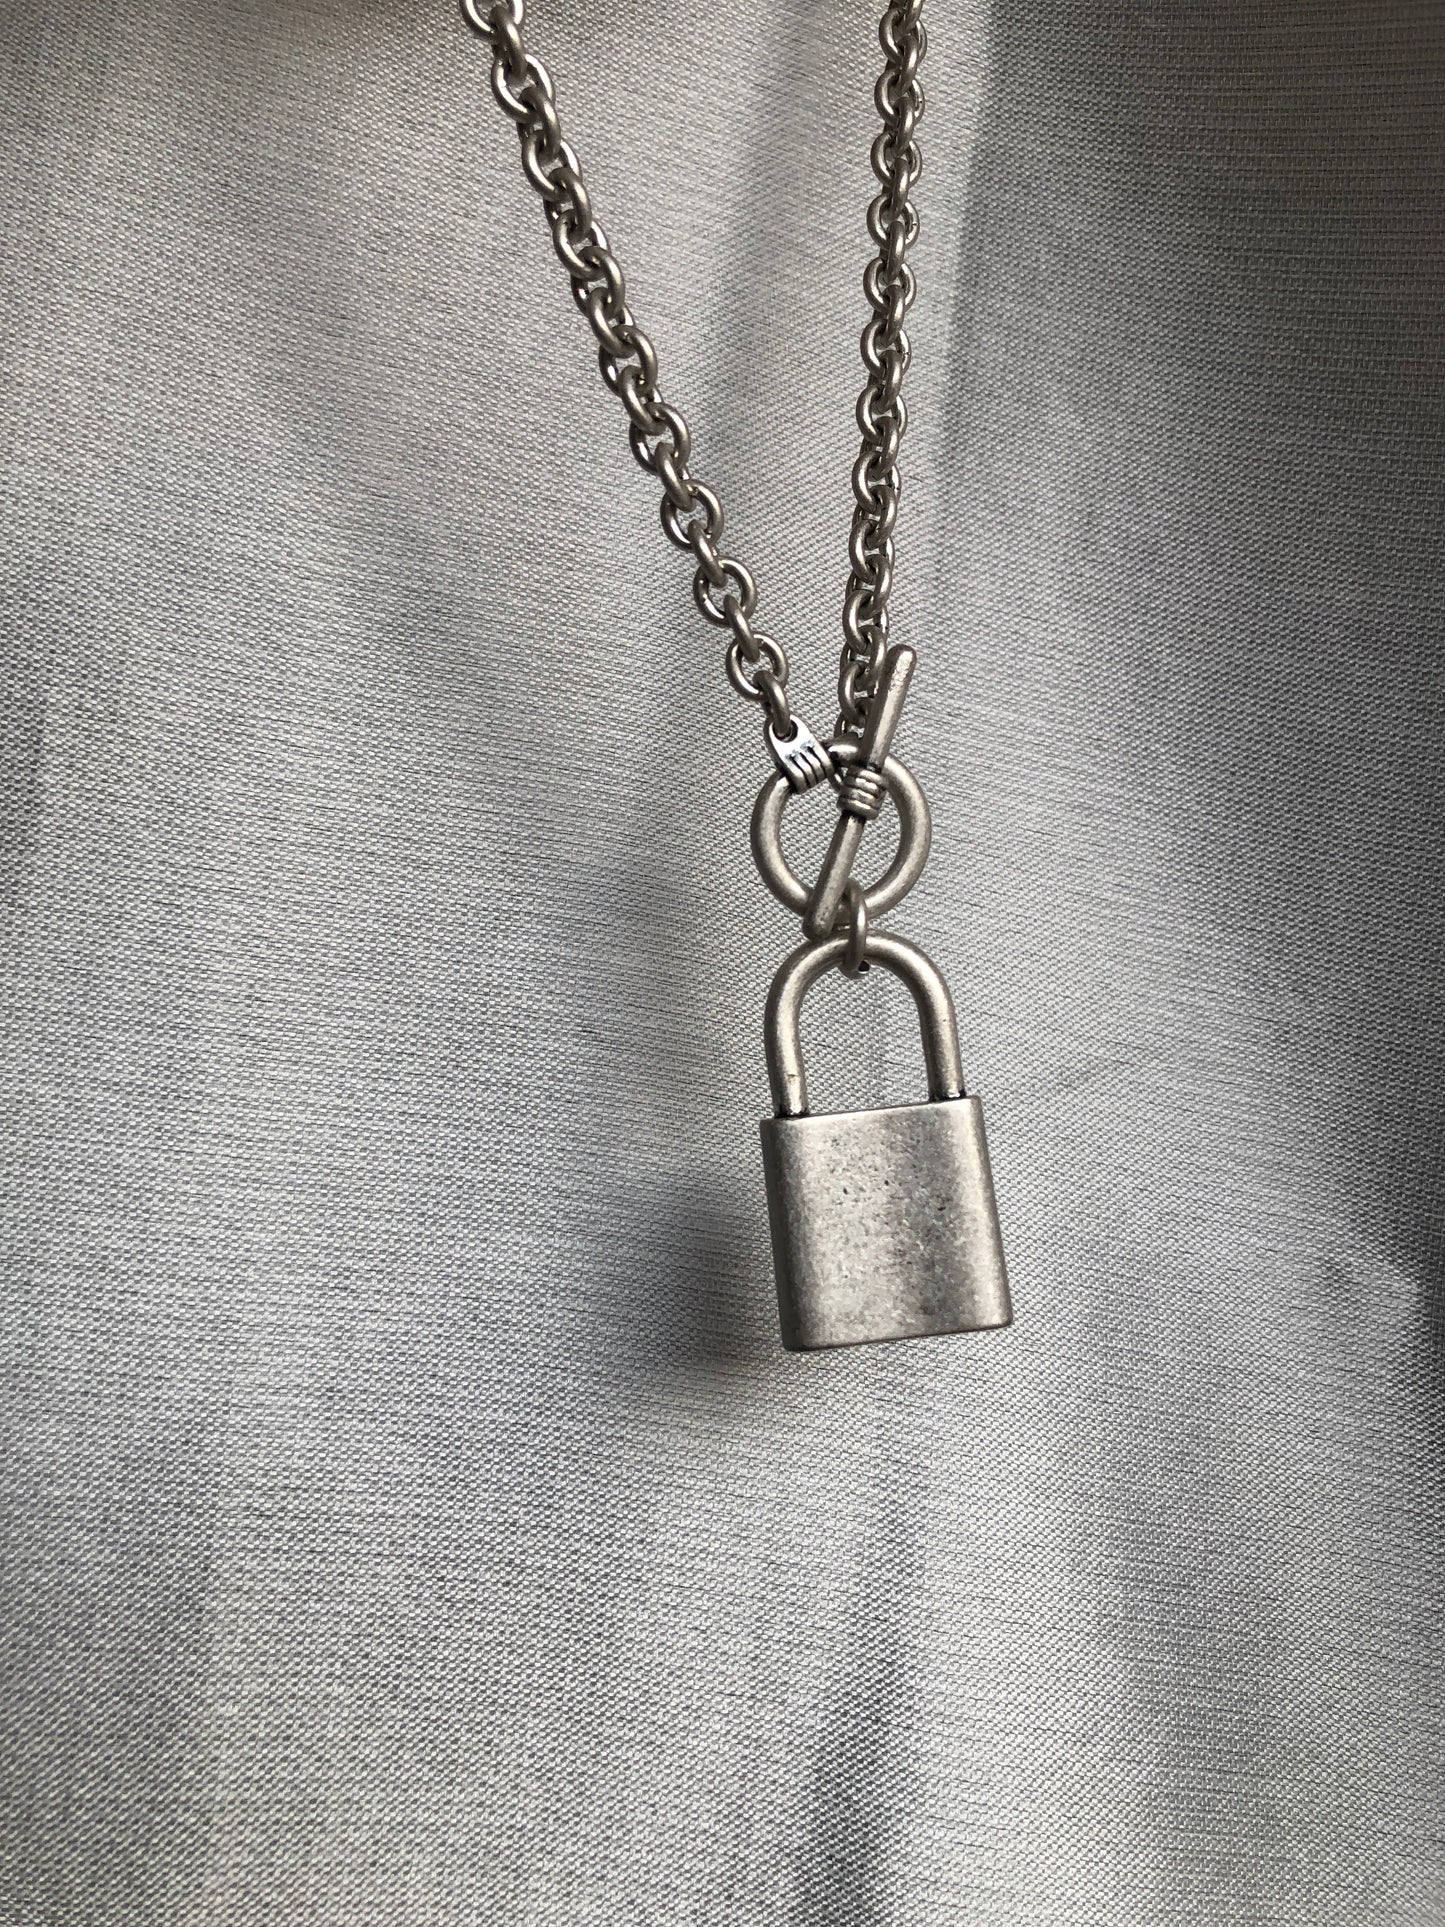 【再販】gibous logo padlock necklace